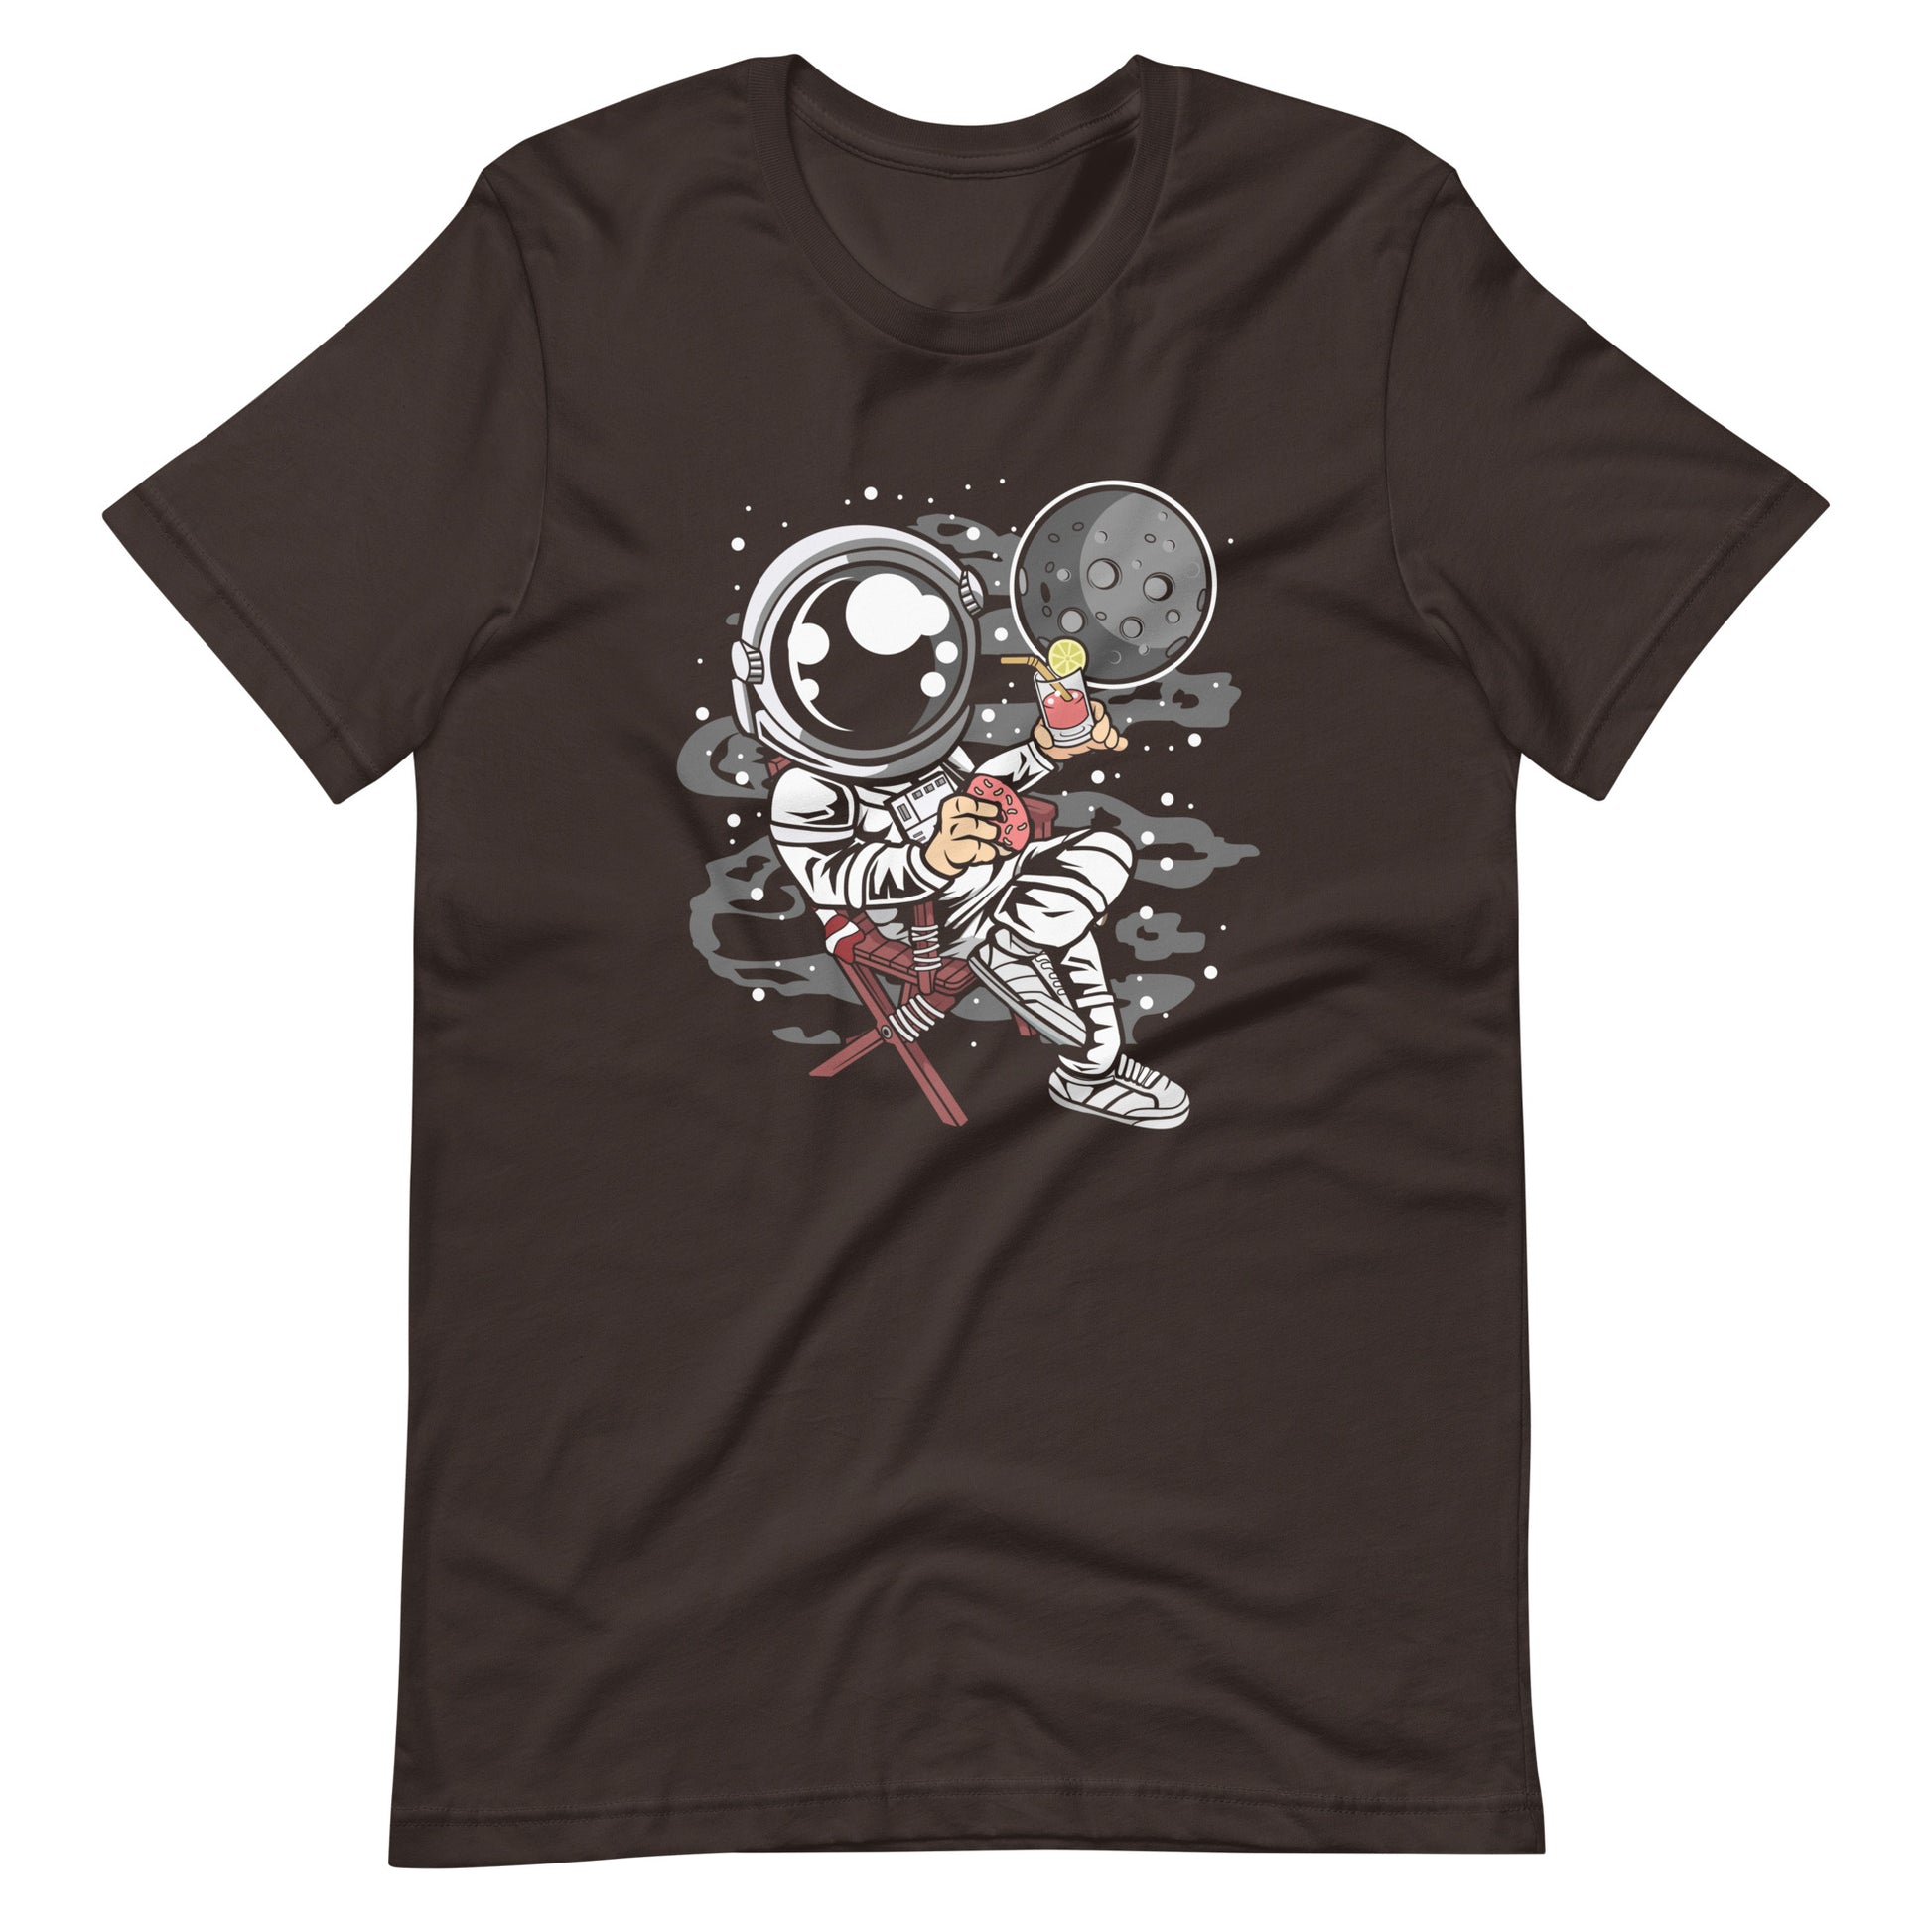 Astronaut Vacation - Men's t-shirt - Brown Front